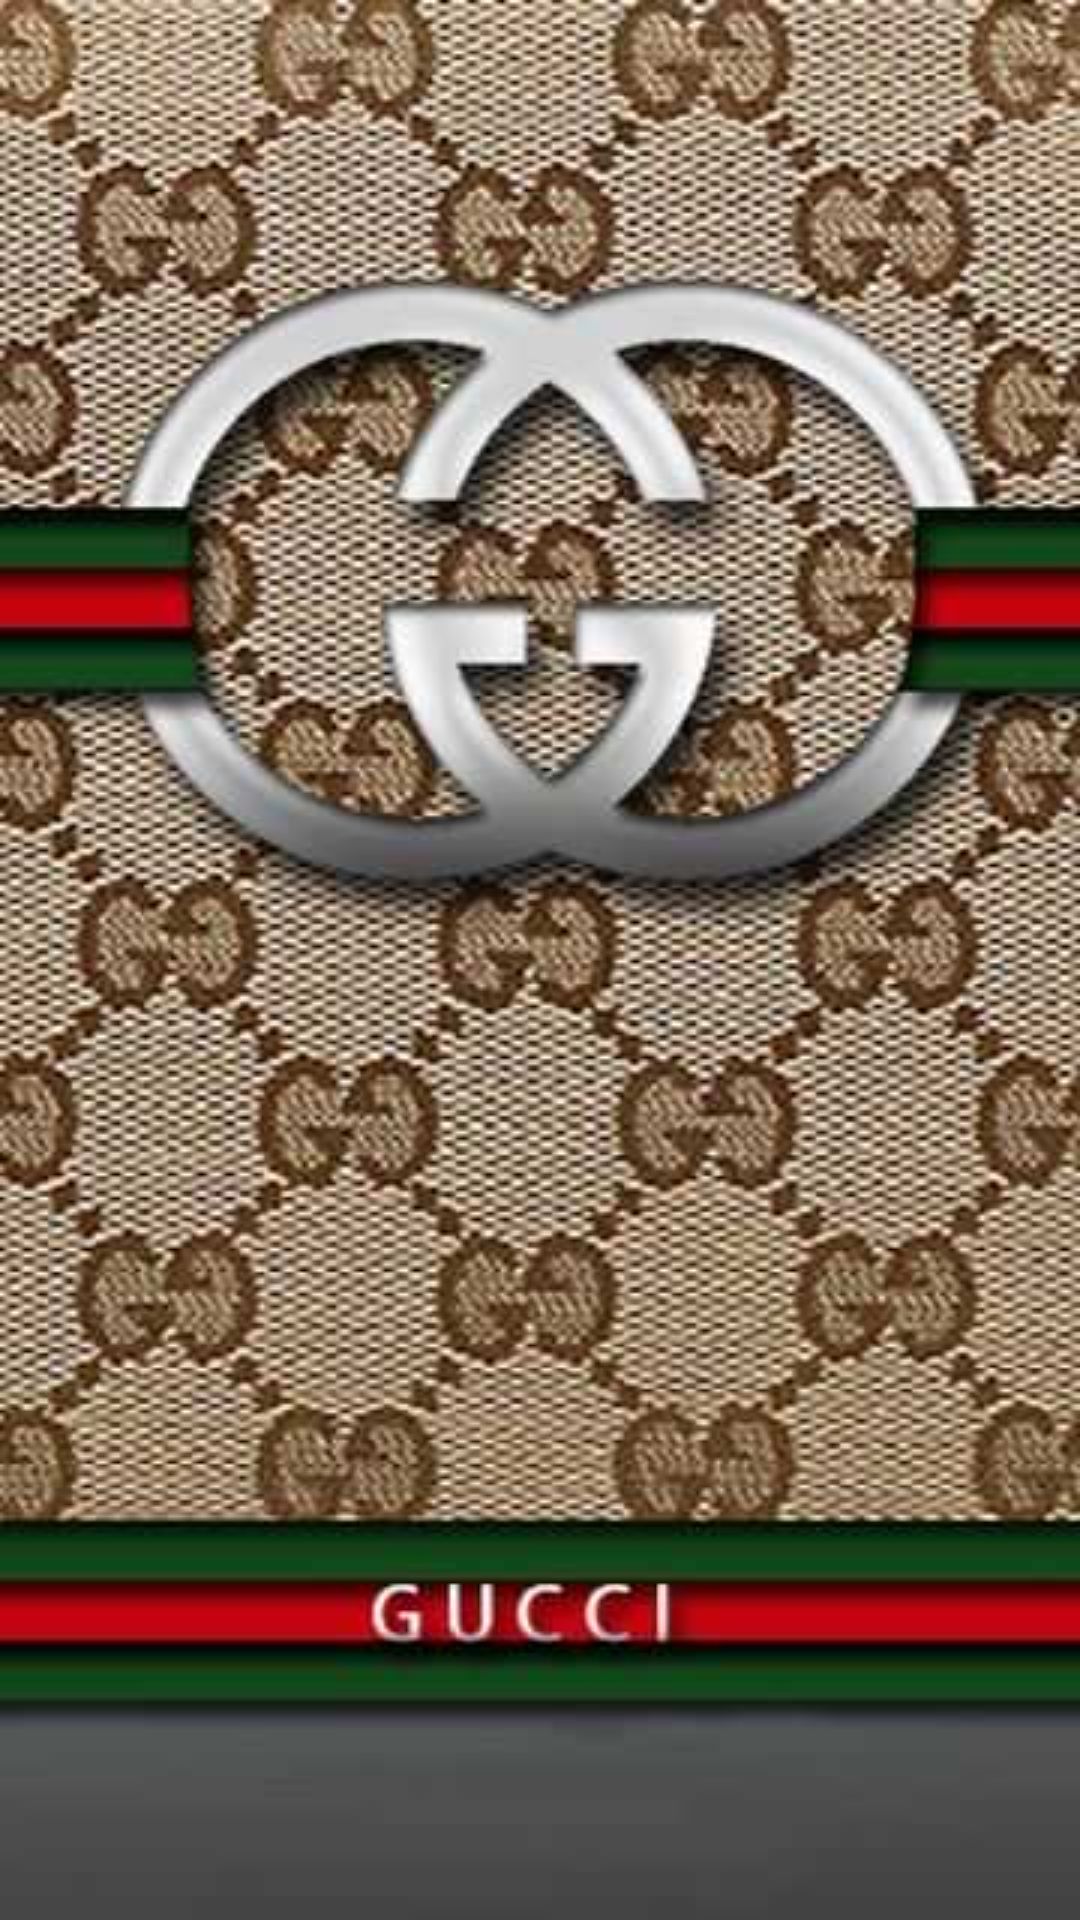 Free download Supreme Gucci Wallpapers Top Free Supreme Gucci